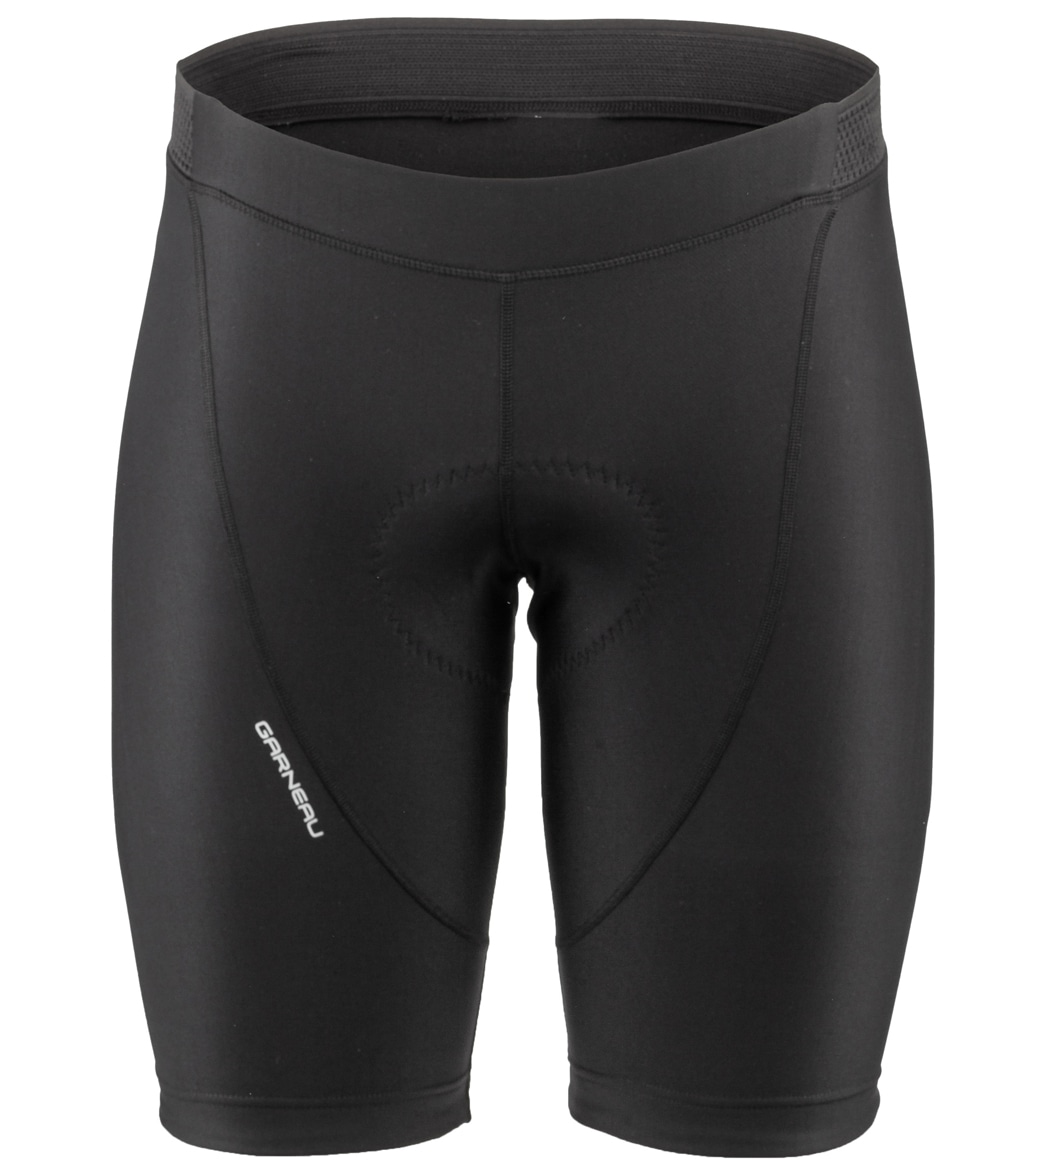 Louis Garneau Men's Fit Sensor 3 Cycling Short - Black Small - Swimoutlet.com